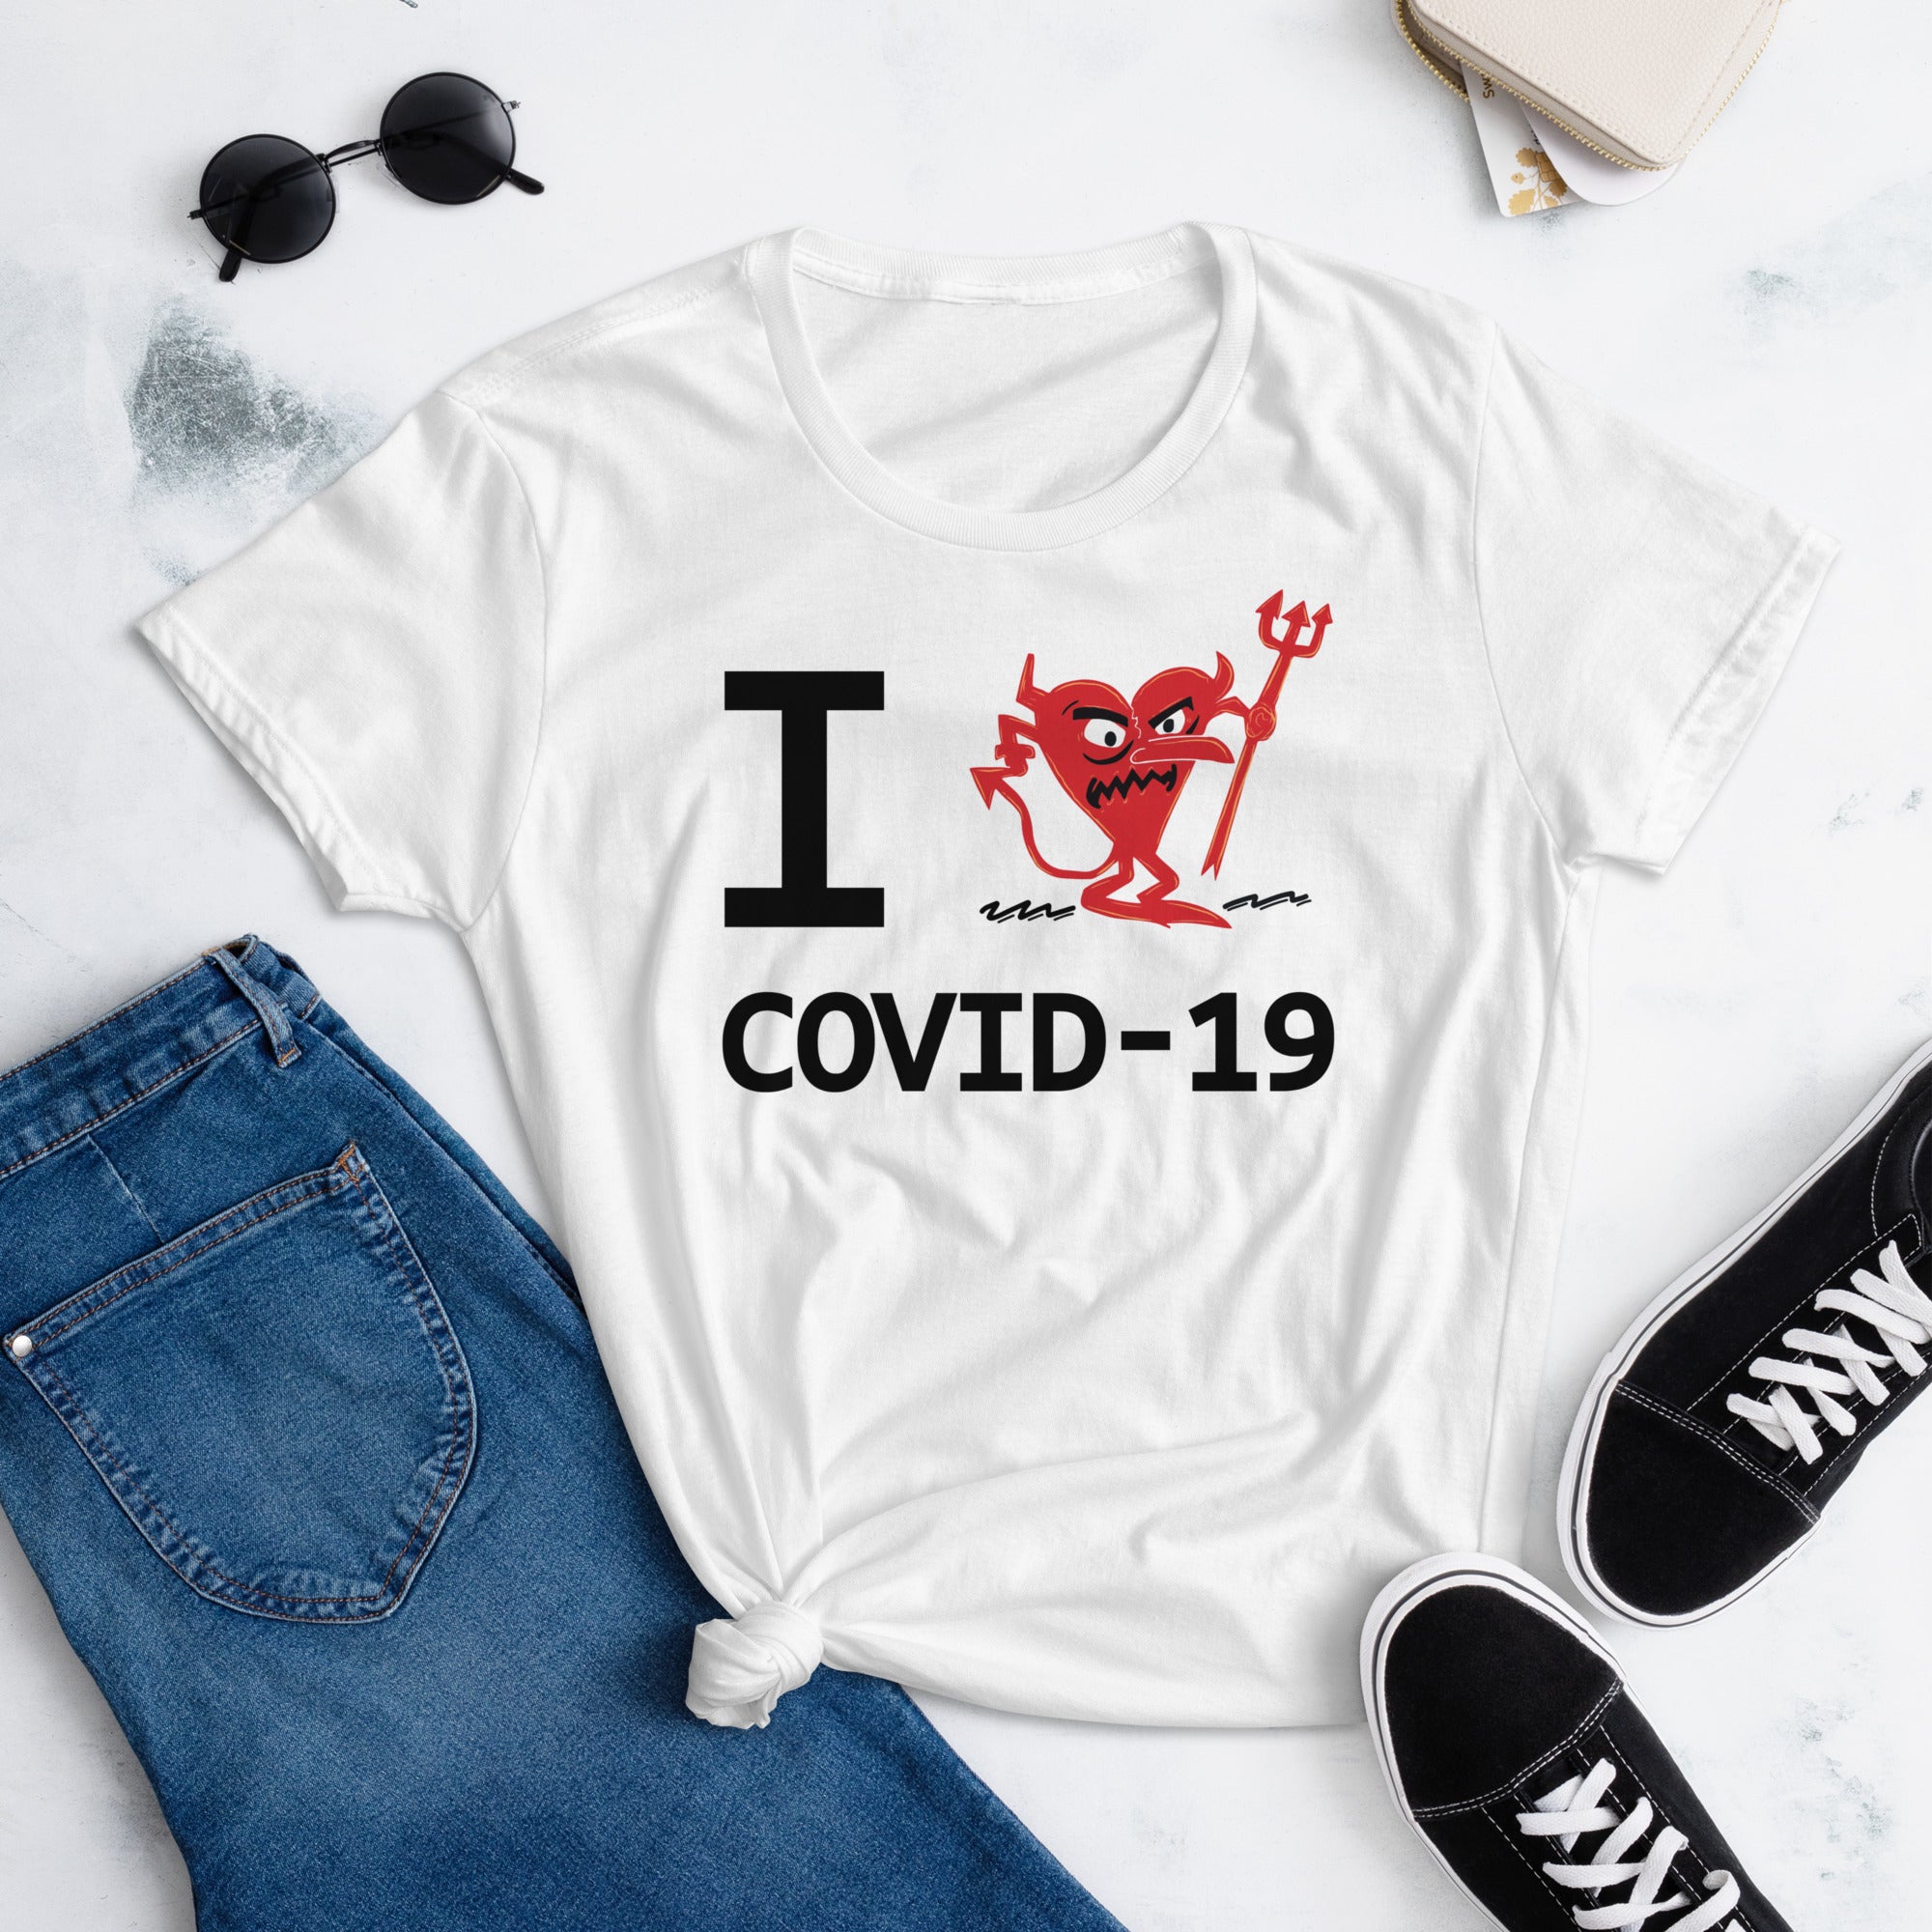 COVID-19 Women's short sleeve t-shirt